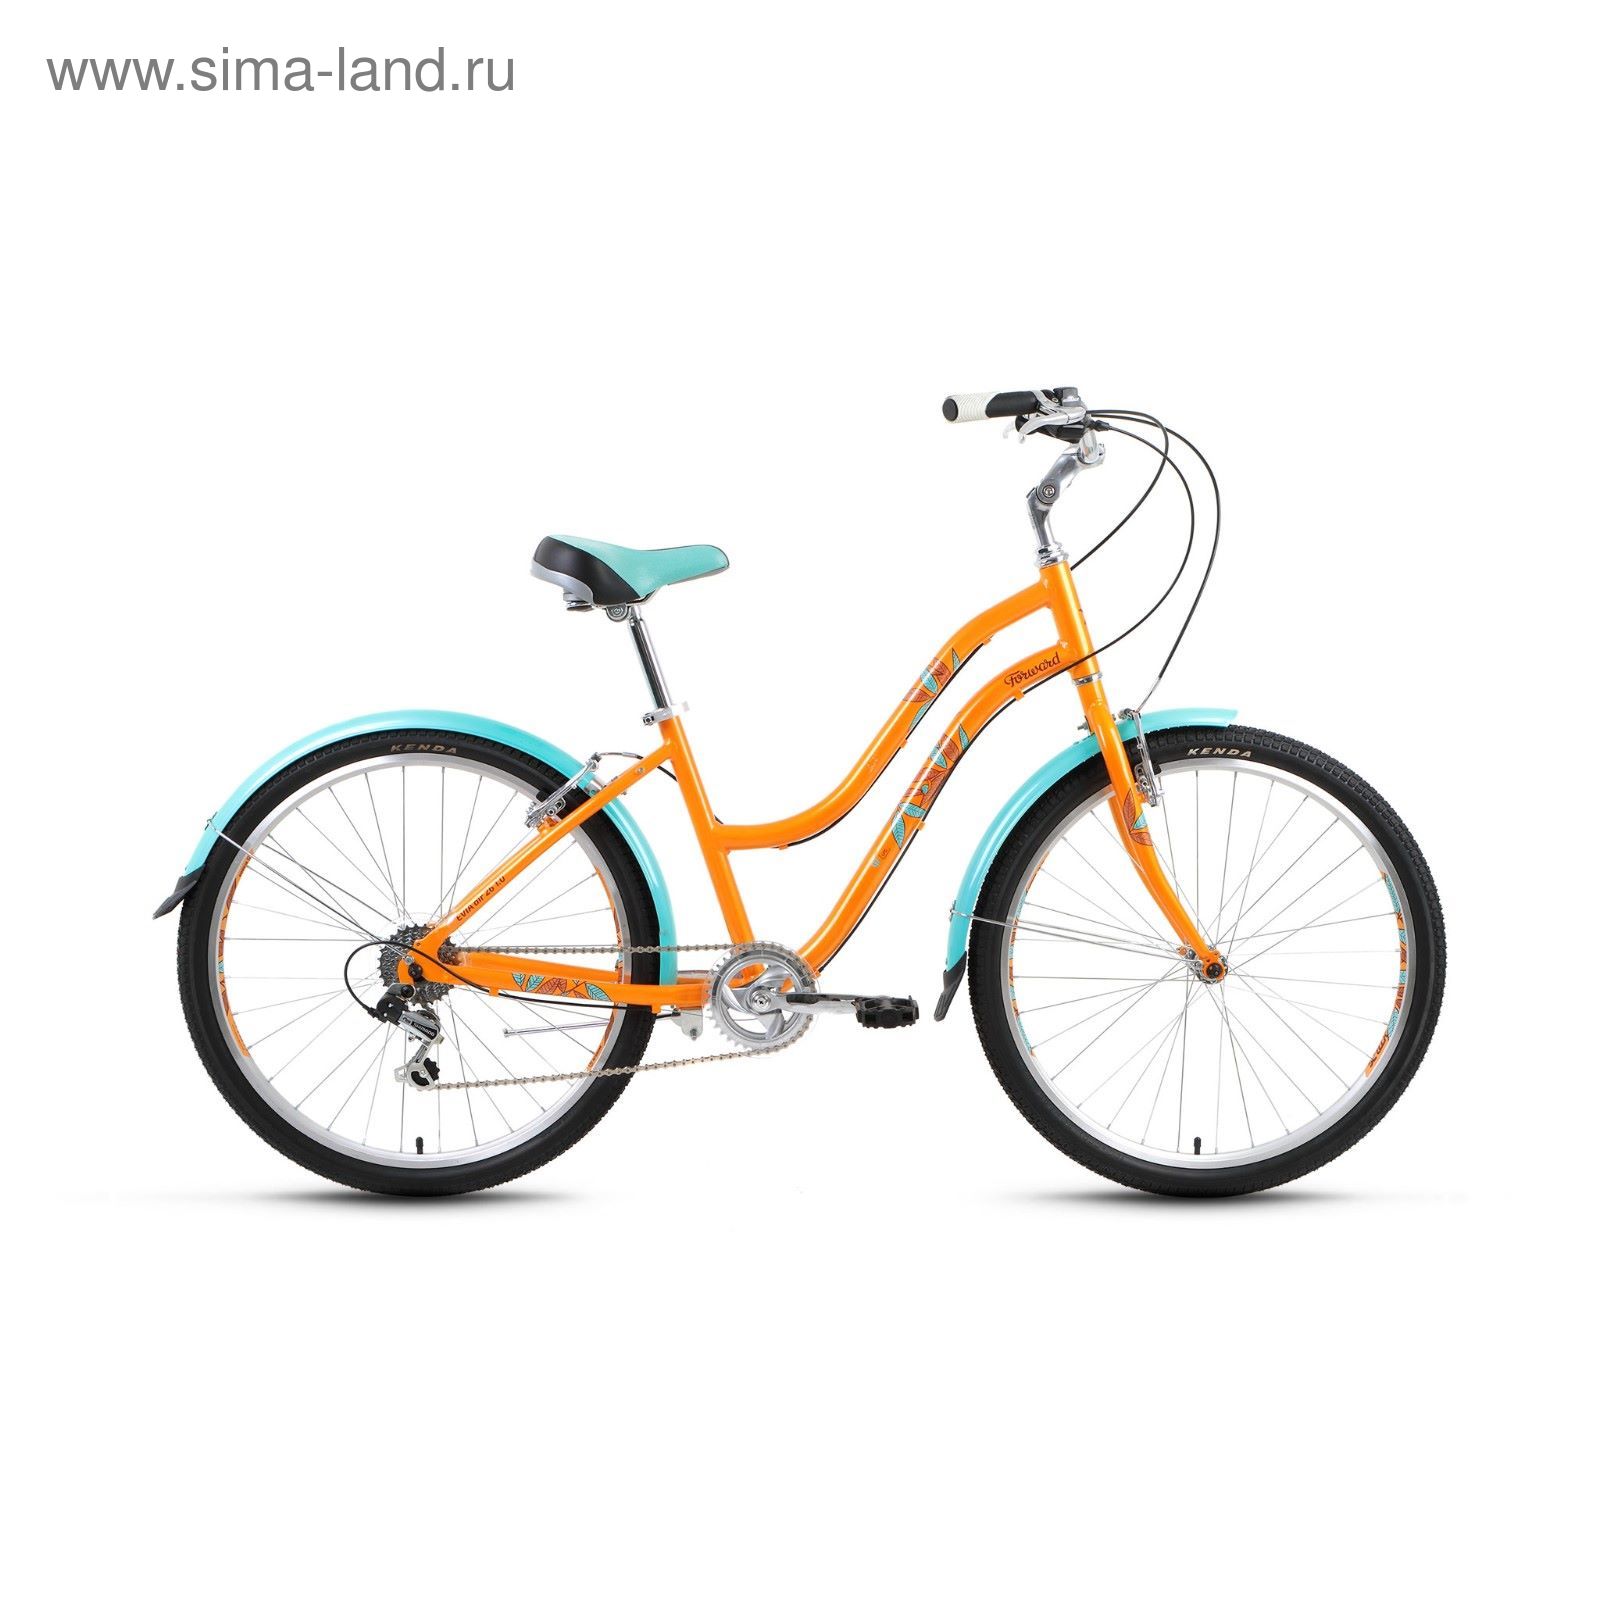 Велосипед 26" Forward Evia Air 1.0, 2017, цвет желтый, размер 16"